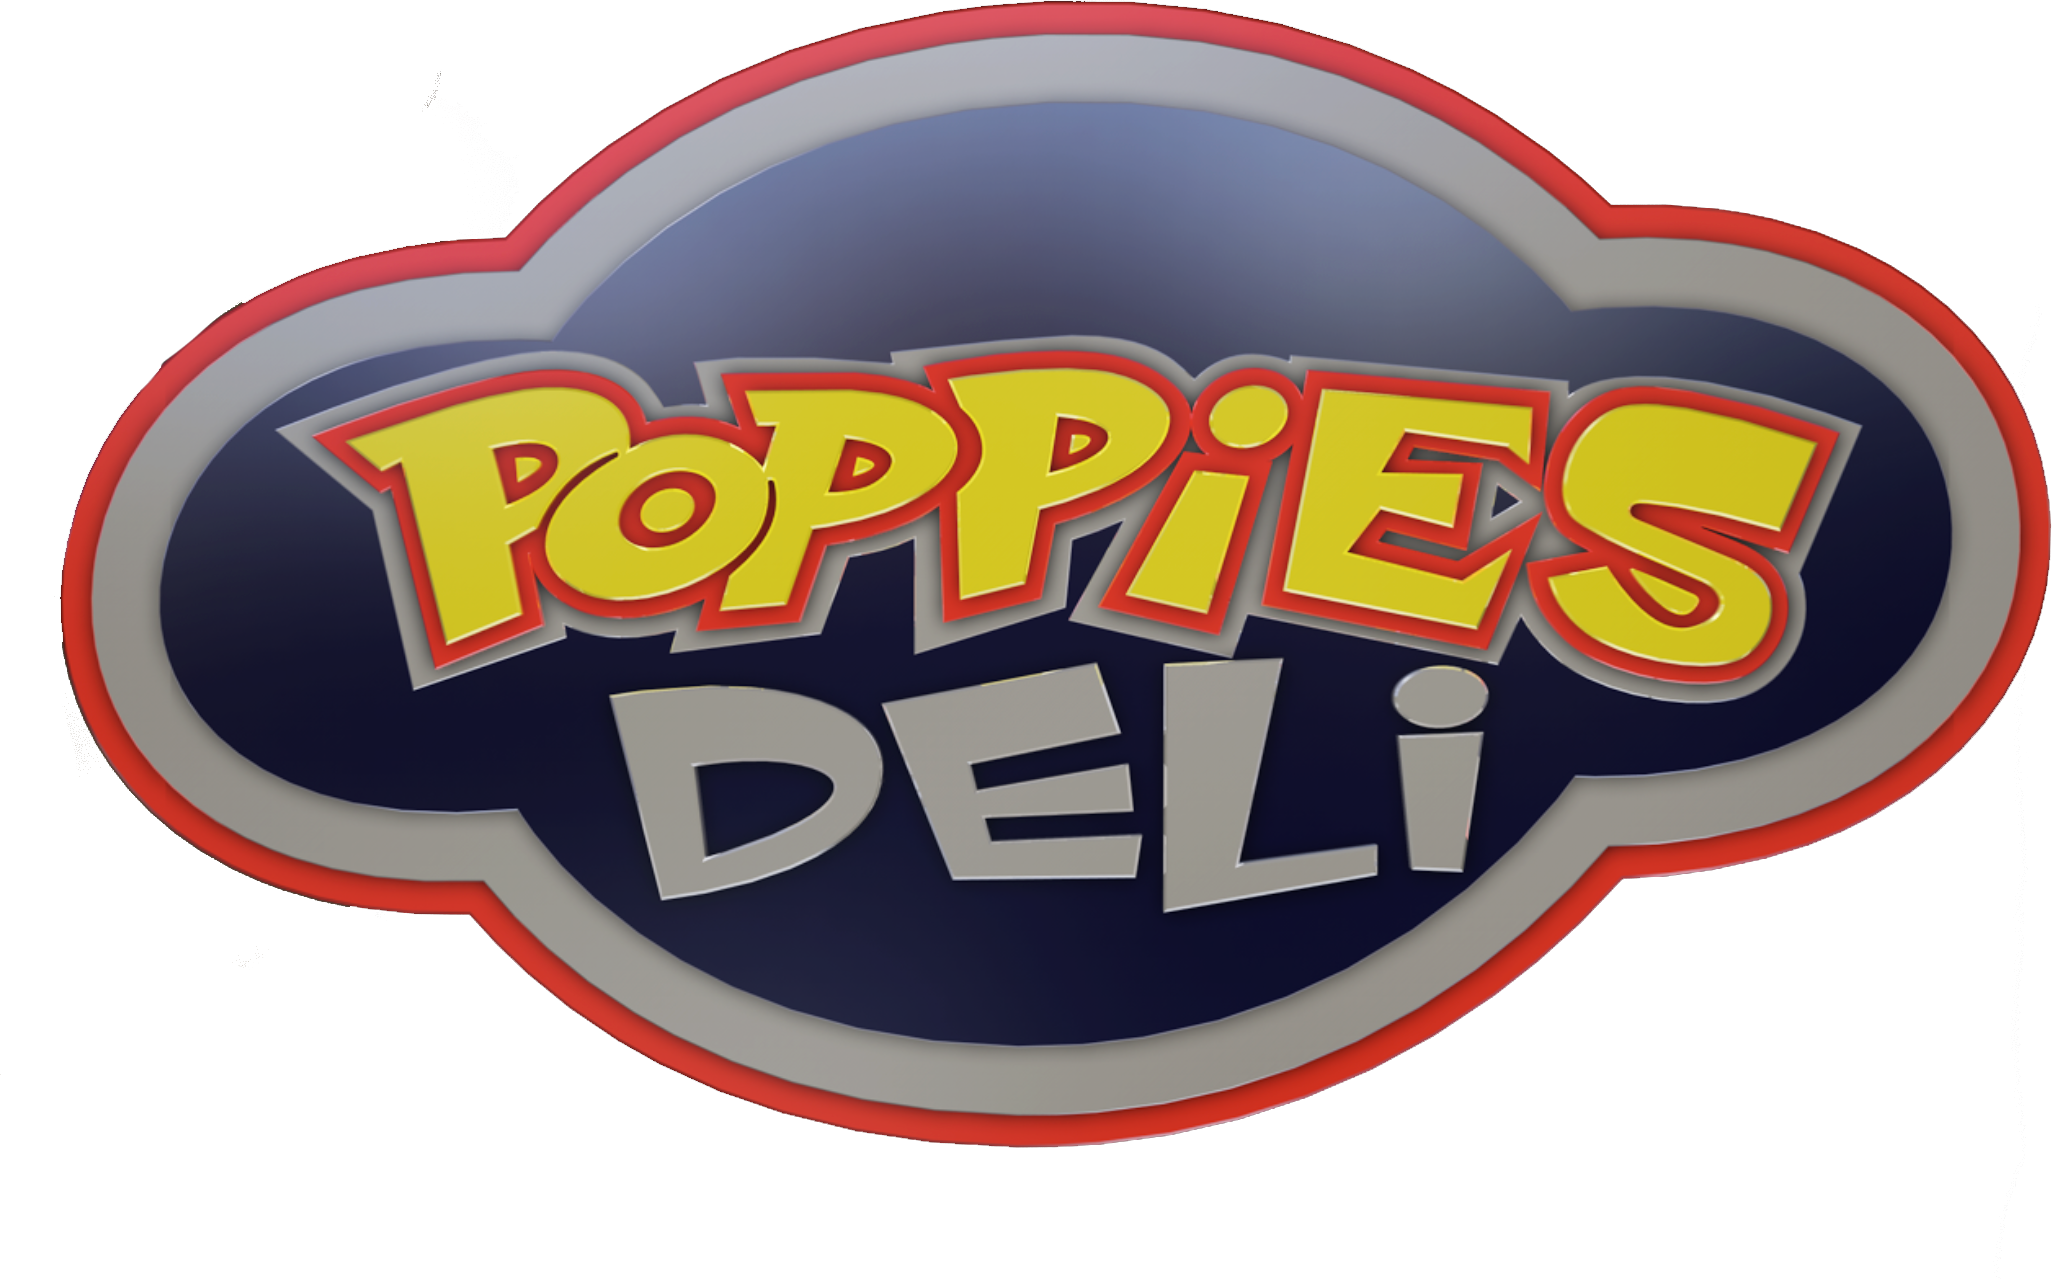 Poppie's Deli